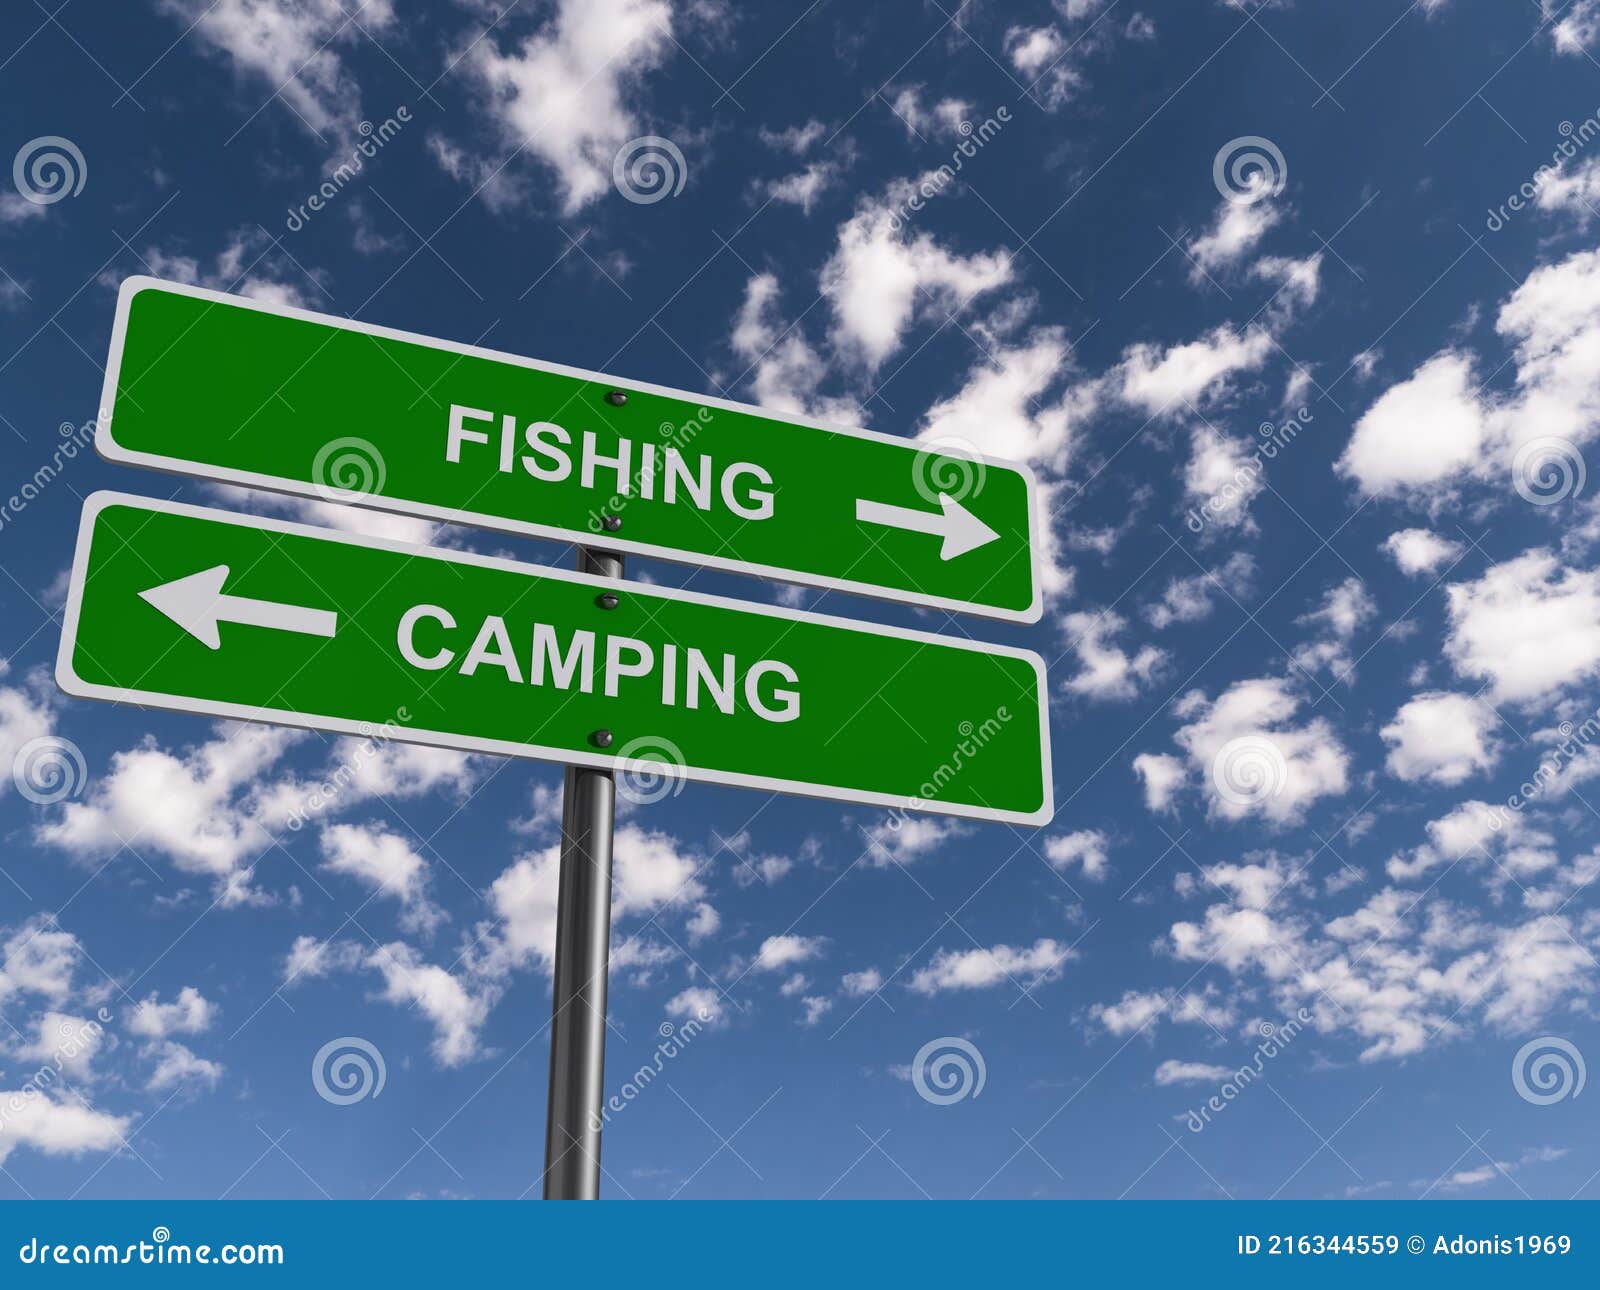 Fishing Camping Traffic Sign Stock Image - Image of hobby, bait: 216344559